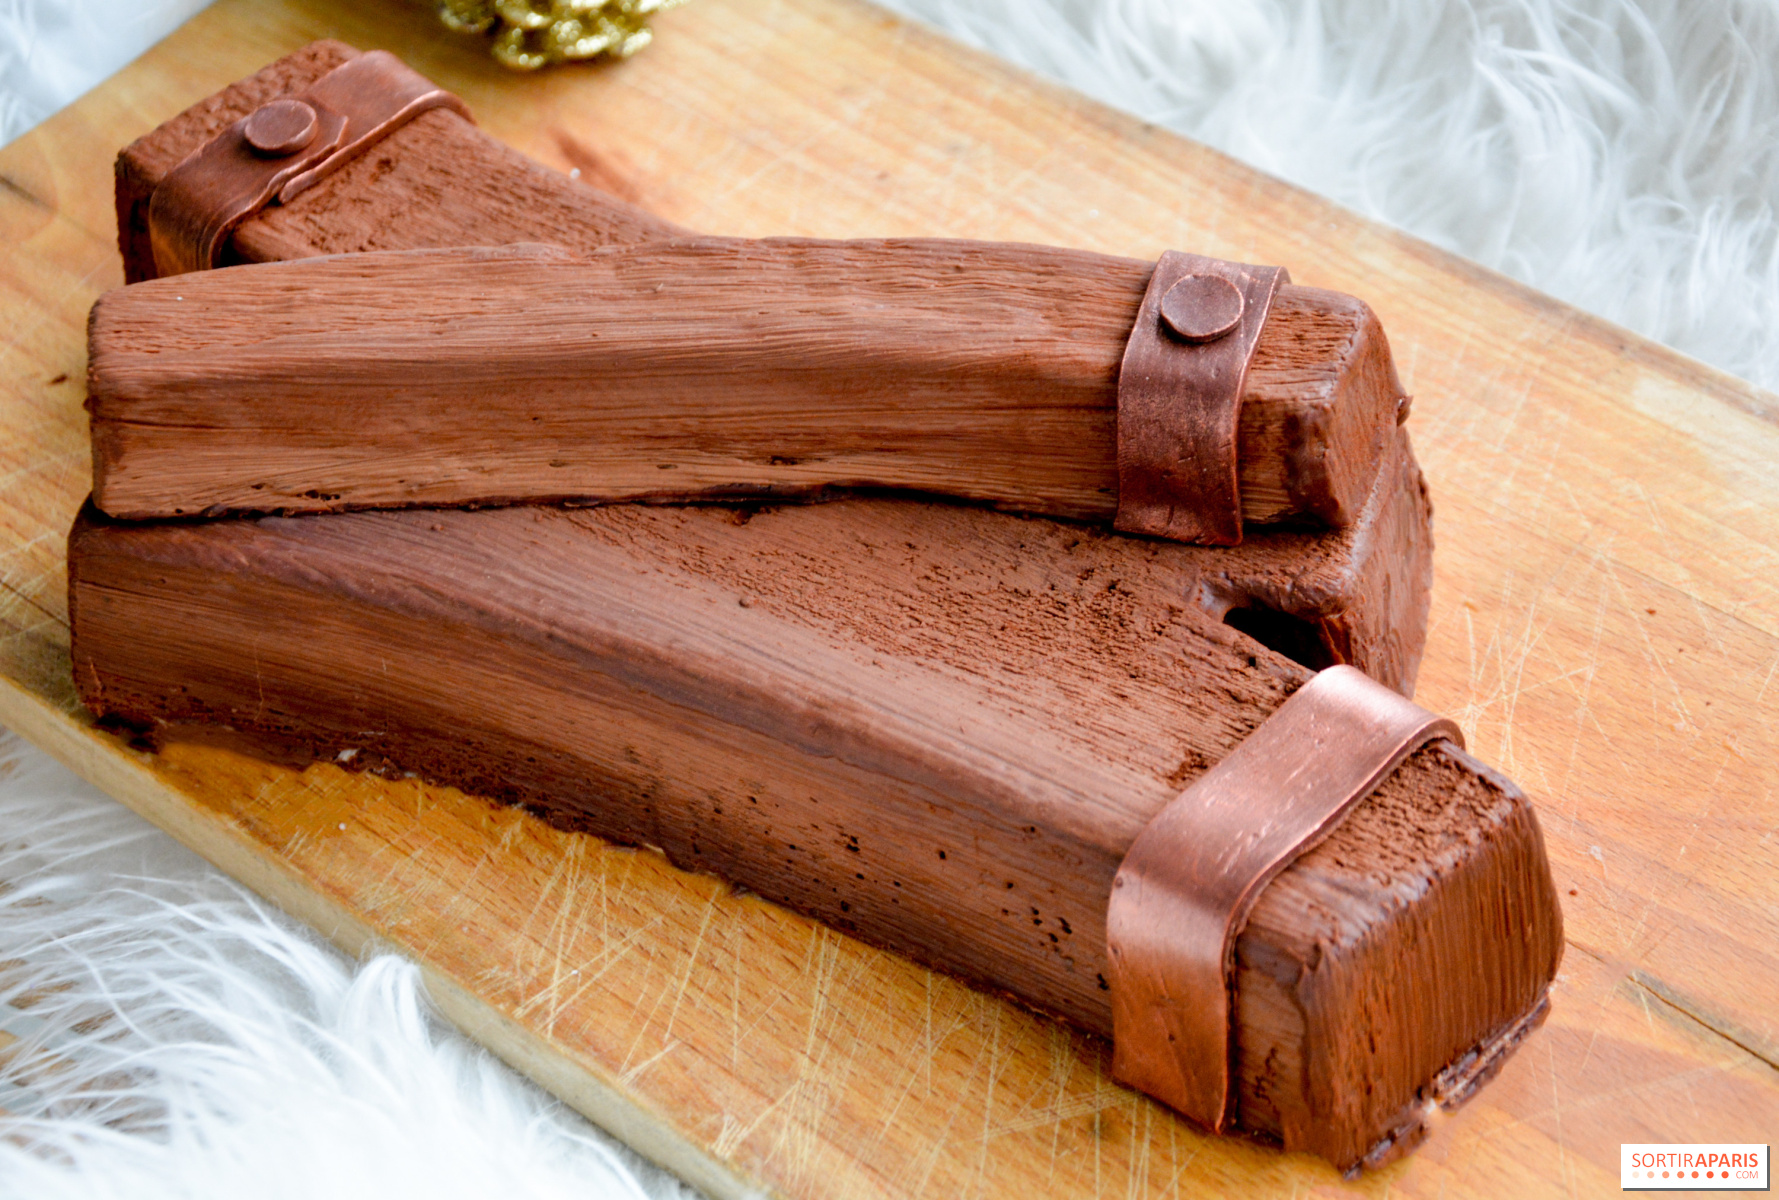 Cadeau gourmand ! Cocoa, set fondue au chocolat design - 24,90 €